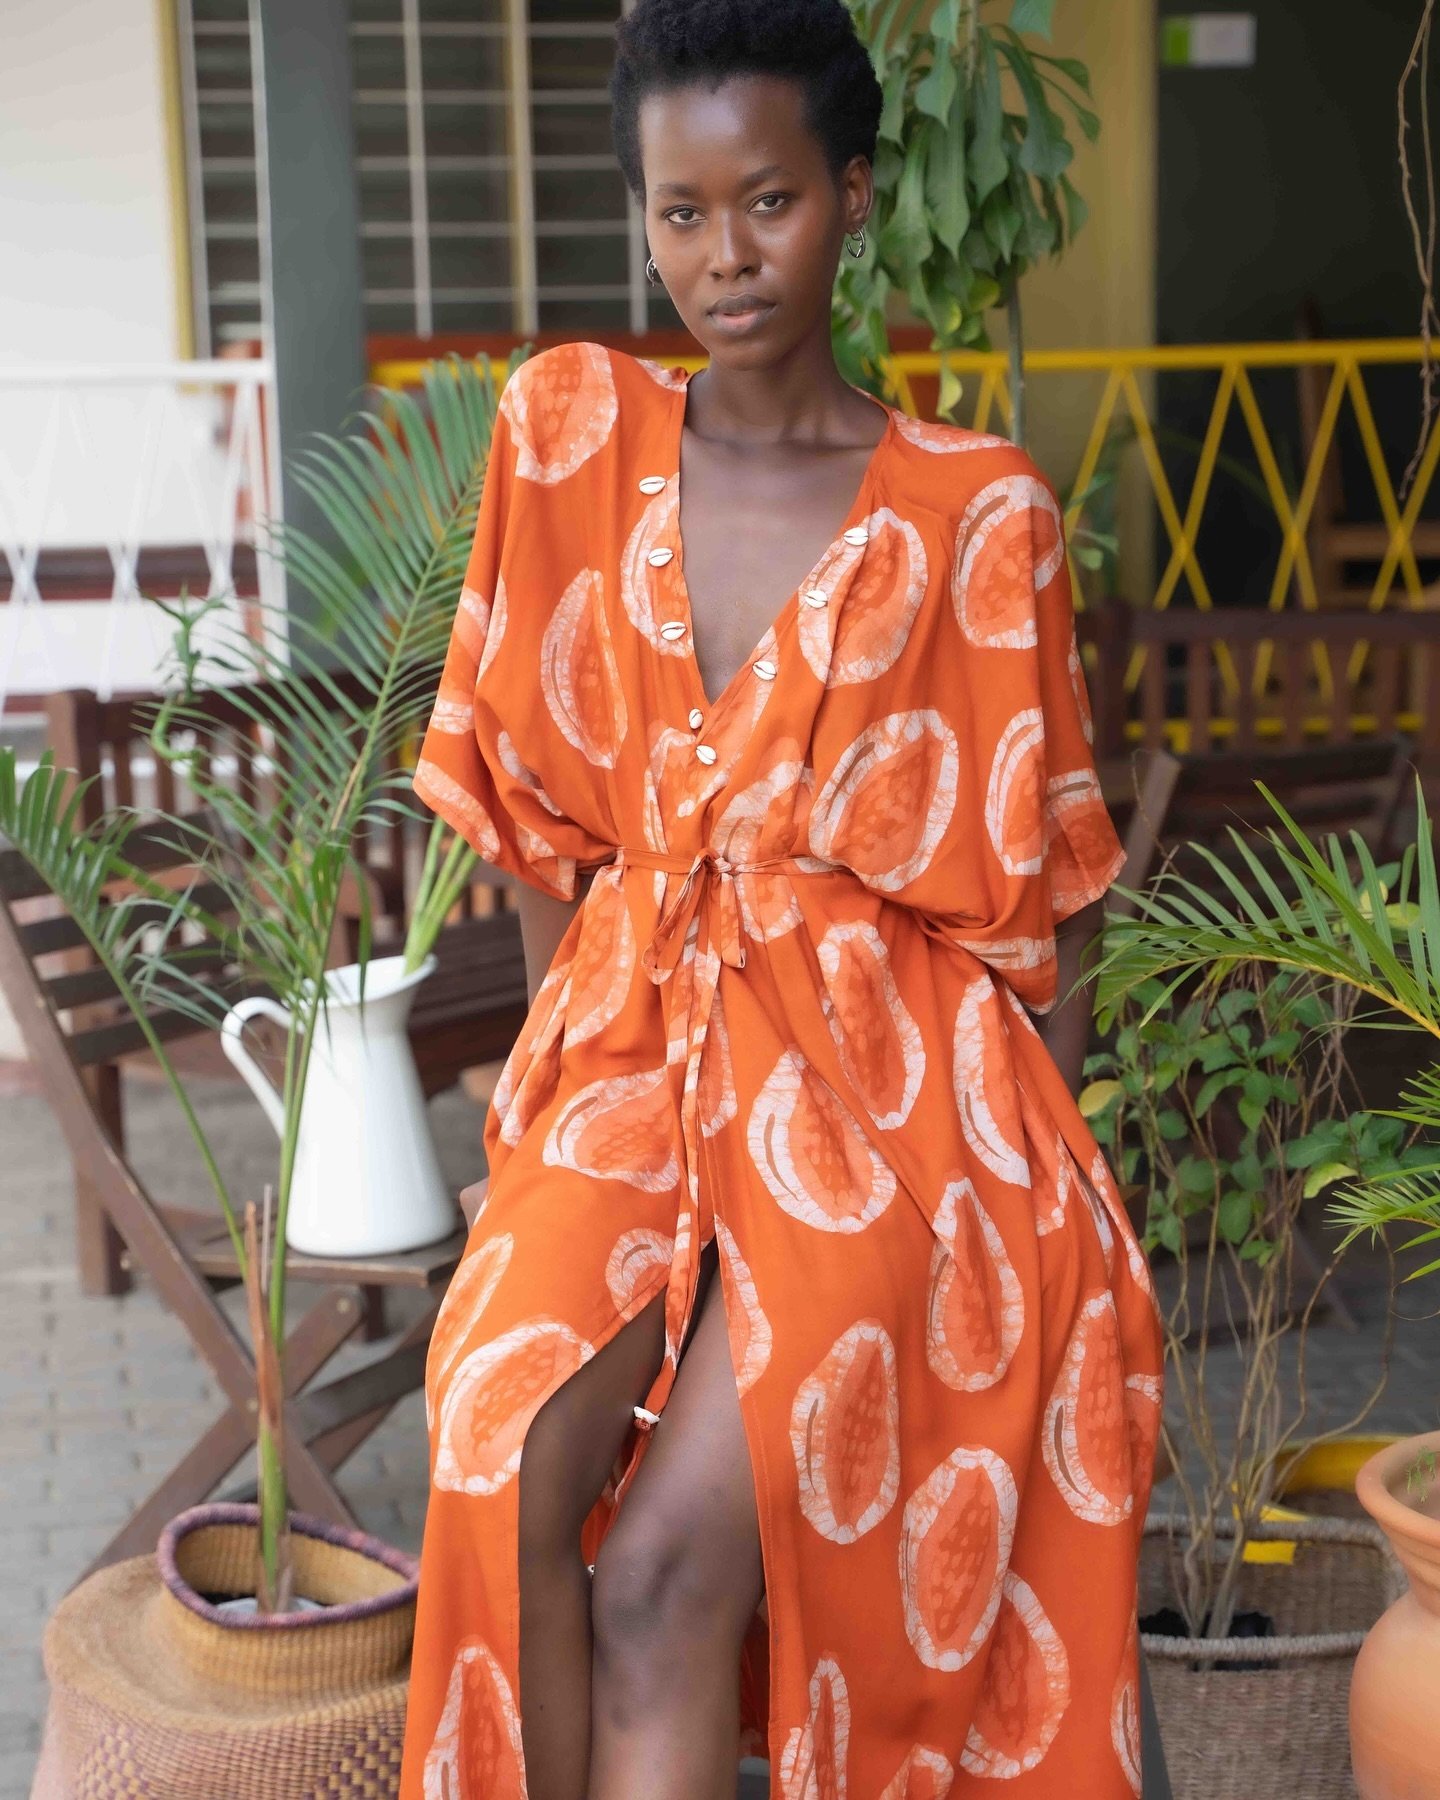 Adiba-Orange ! Highly anticipated and finally back in stock 🧡
.
.
.
#kimonos #madeinghana🇬🇭 #batikfashionshow #handmadefashion #schweiz🇨🇭 #z&uuml;rich #batik #travelinspiredfashion #beachoutfits #resortlife #summeroutfitideas #fashionblogging #m